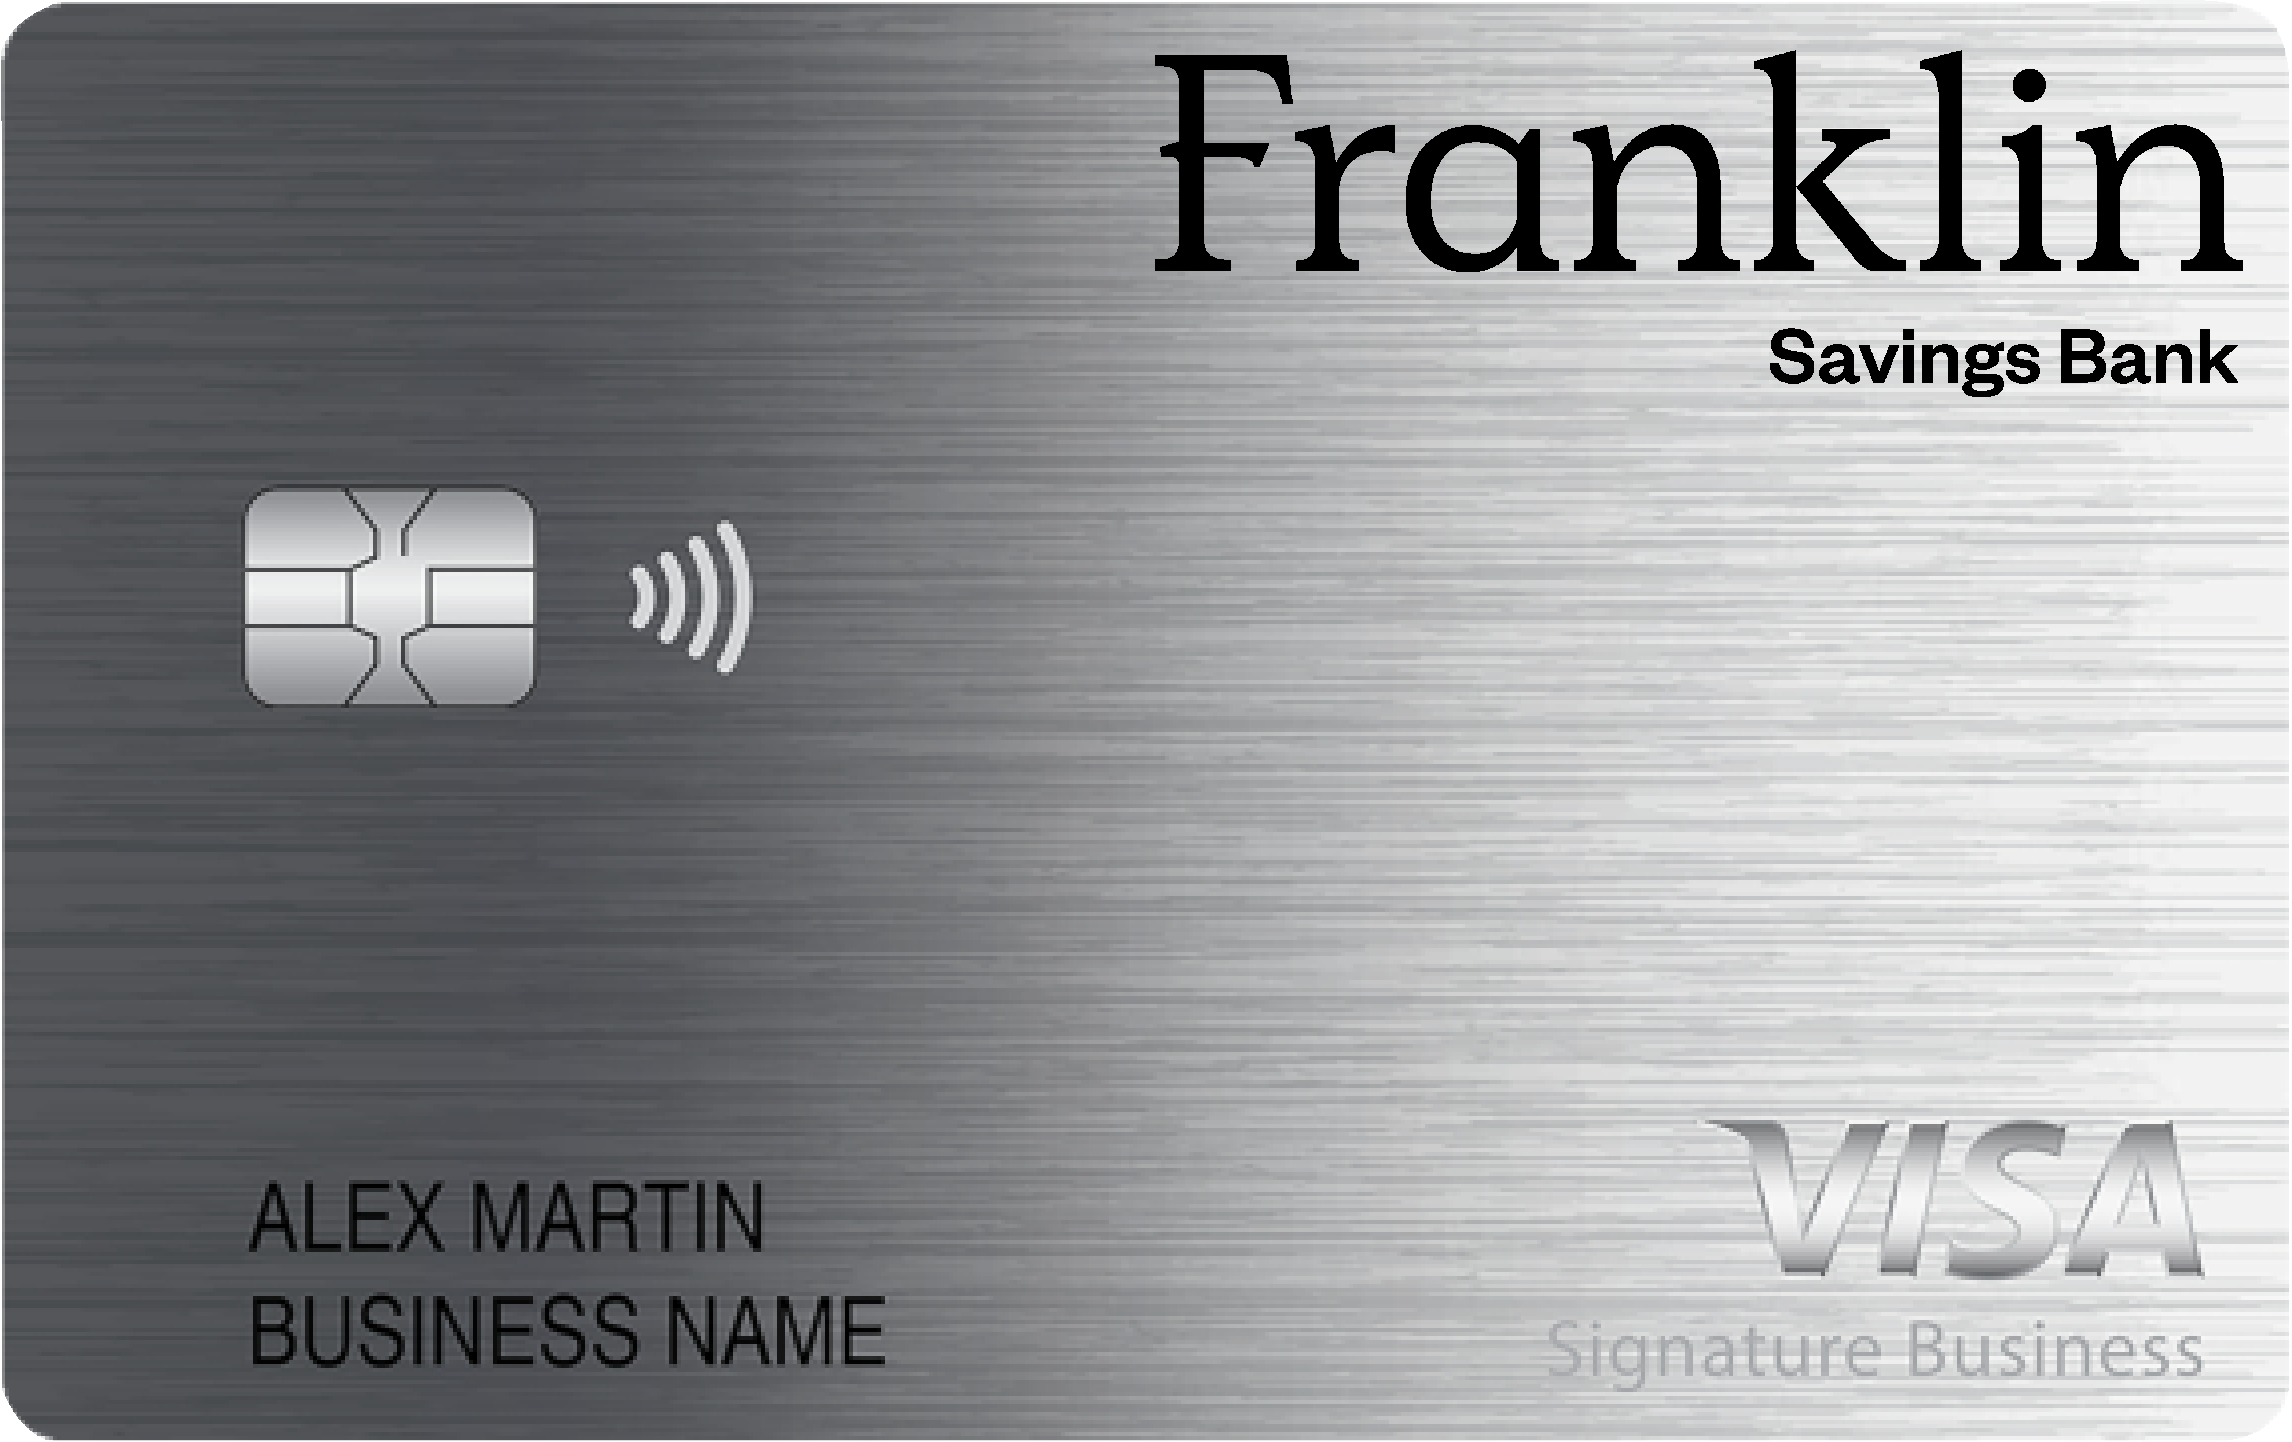 Franklin Savings Bank Smart Business Rewards Card